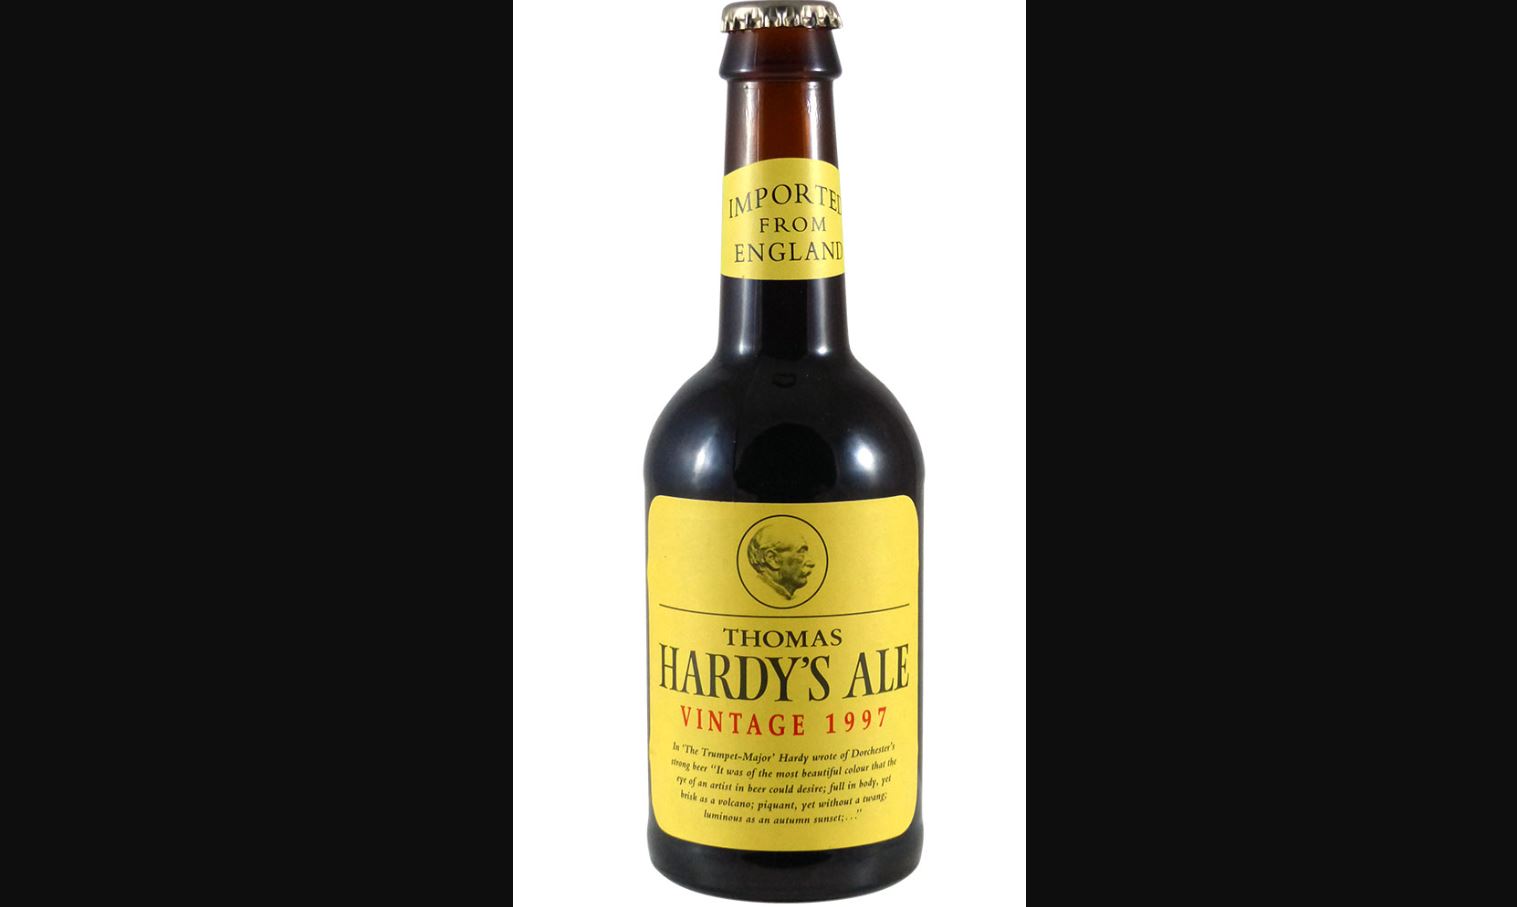 Thomas Hardy’s Ale